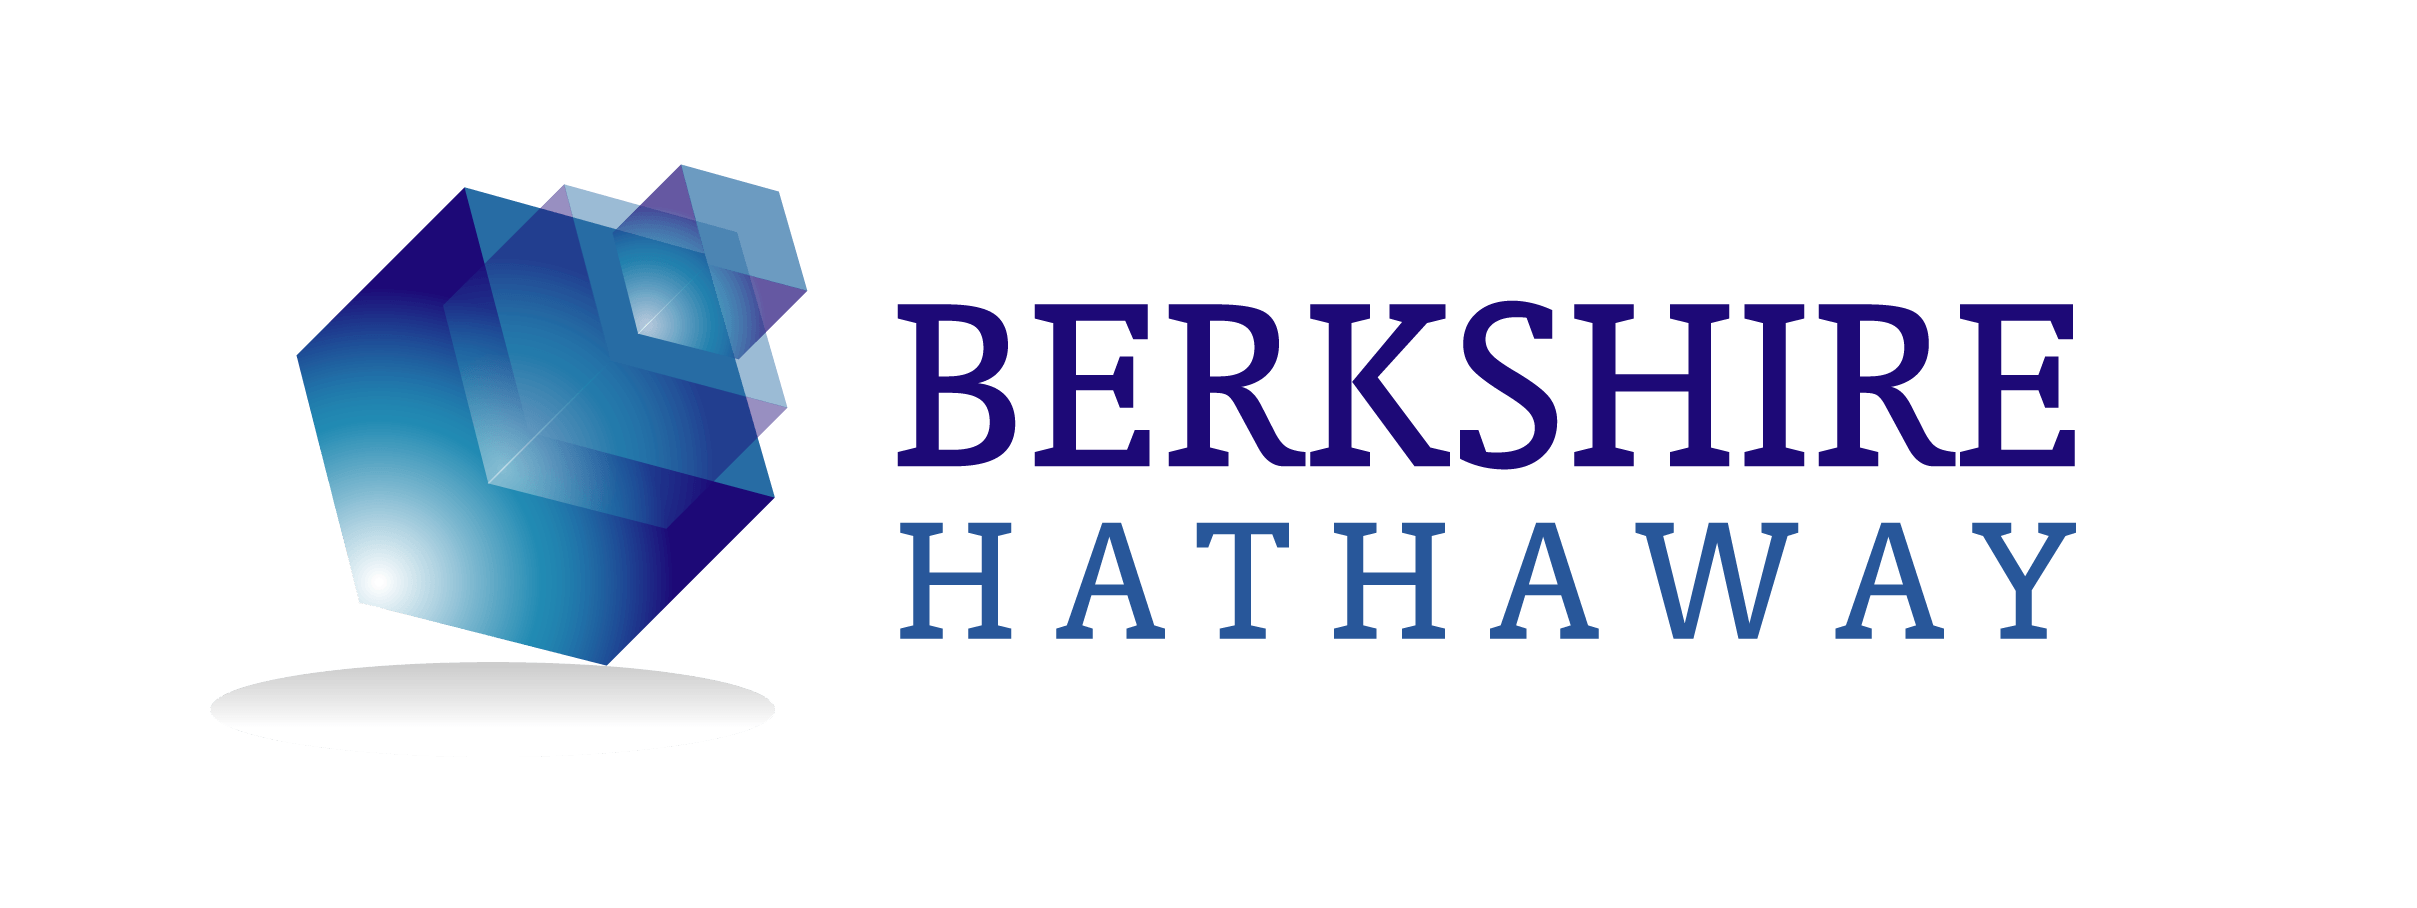 Berkshire Hathaway Logo - Berkshire Hathaway BRK.A Logo